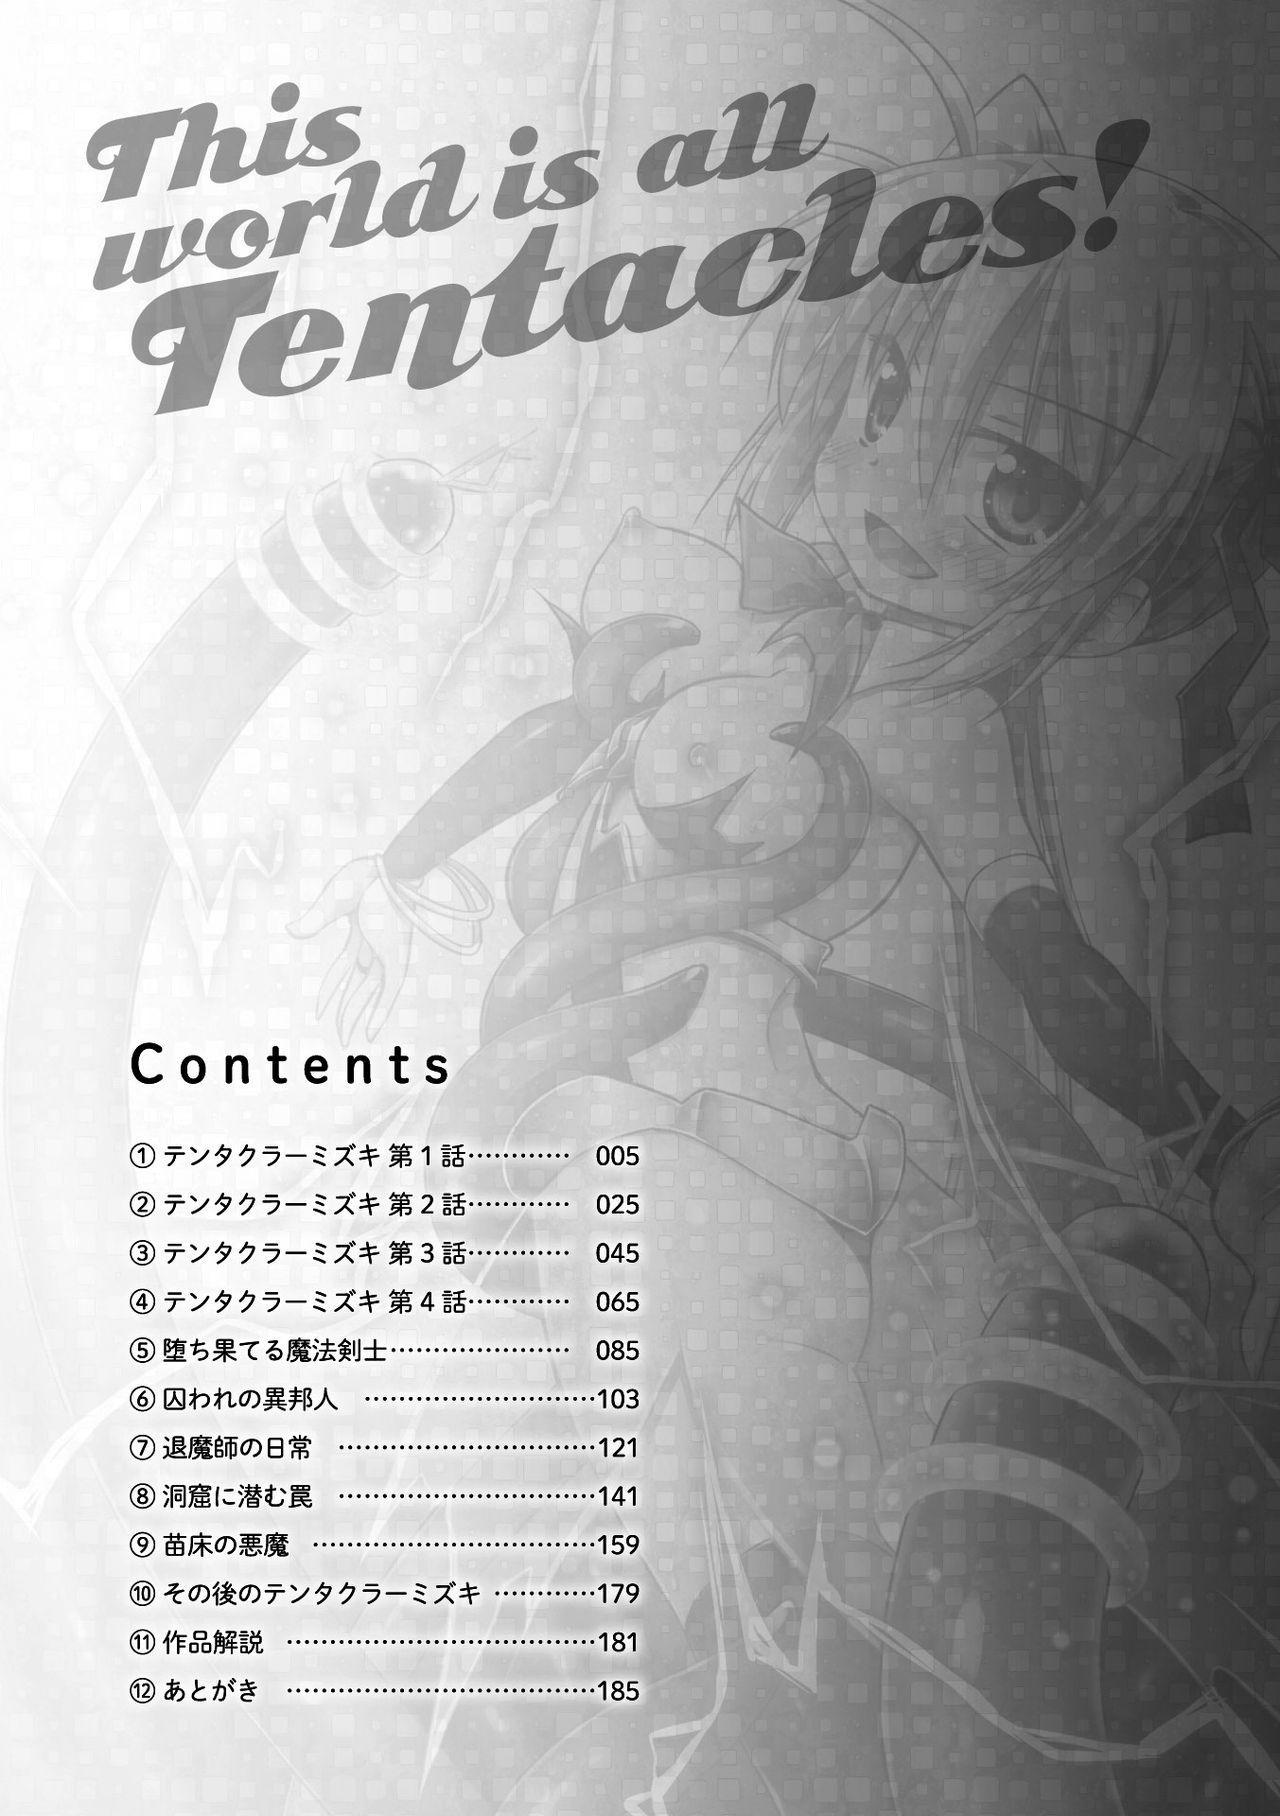 This World is all Tentacles | Konoyo wa Subete Tentacle! 4